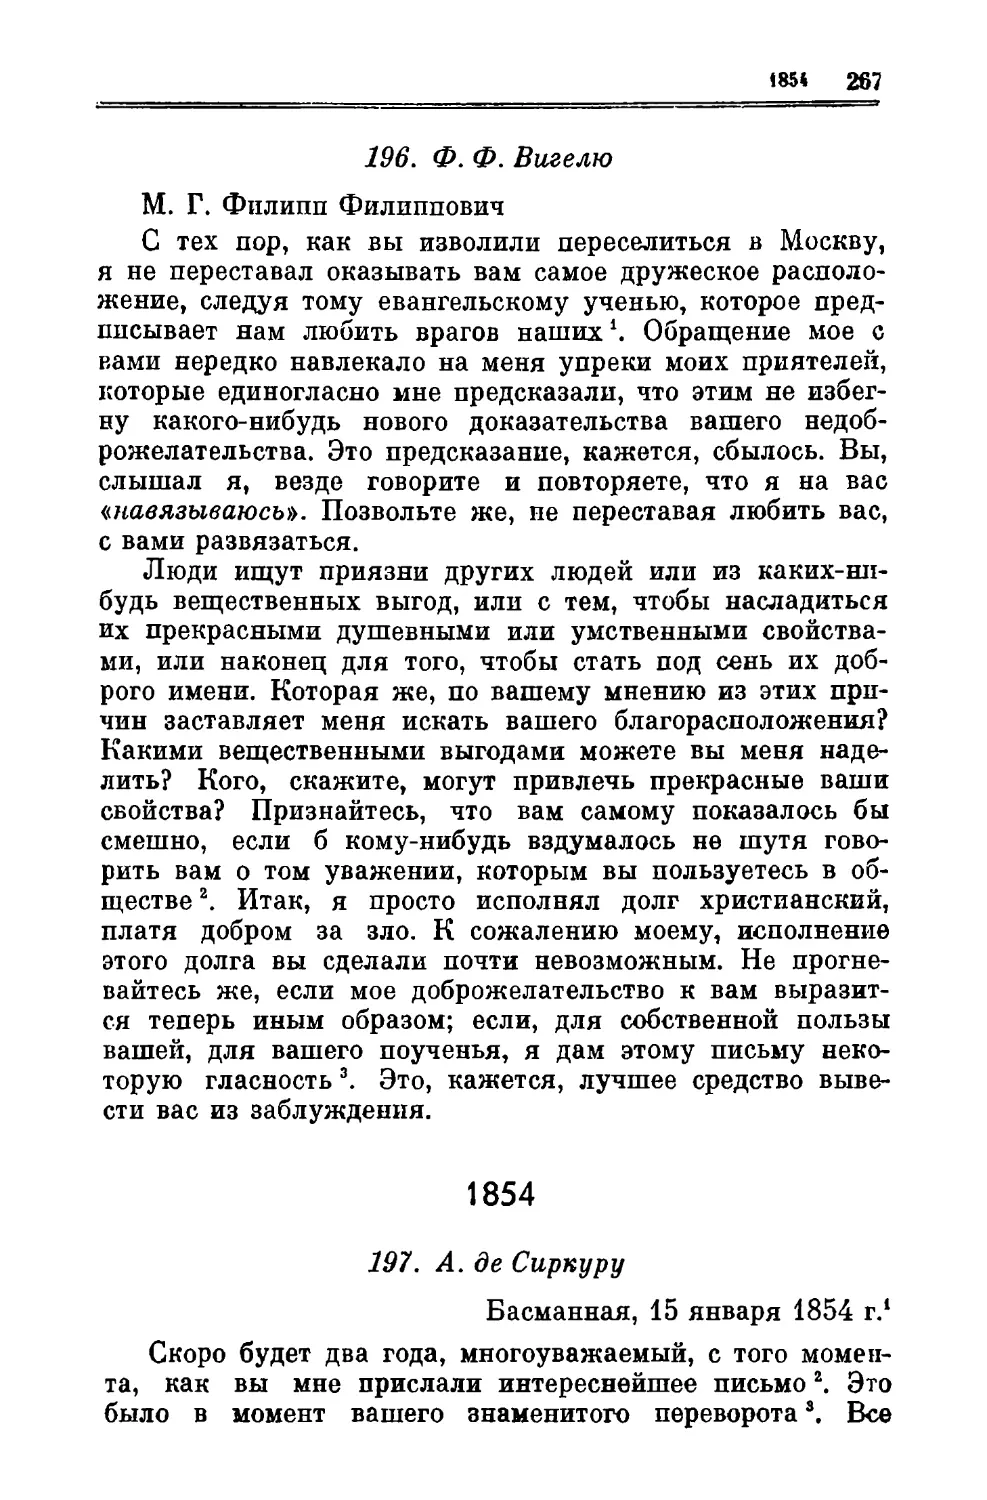 196. Вигелю Φ.Φ.
1854